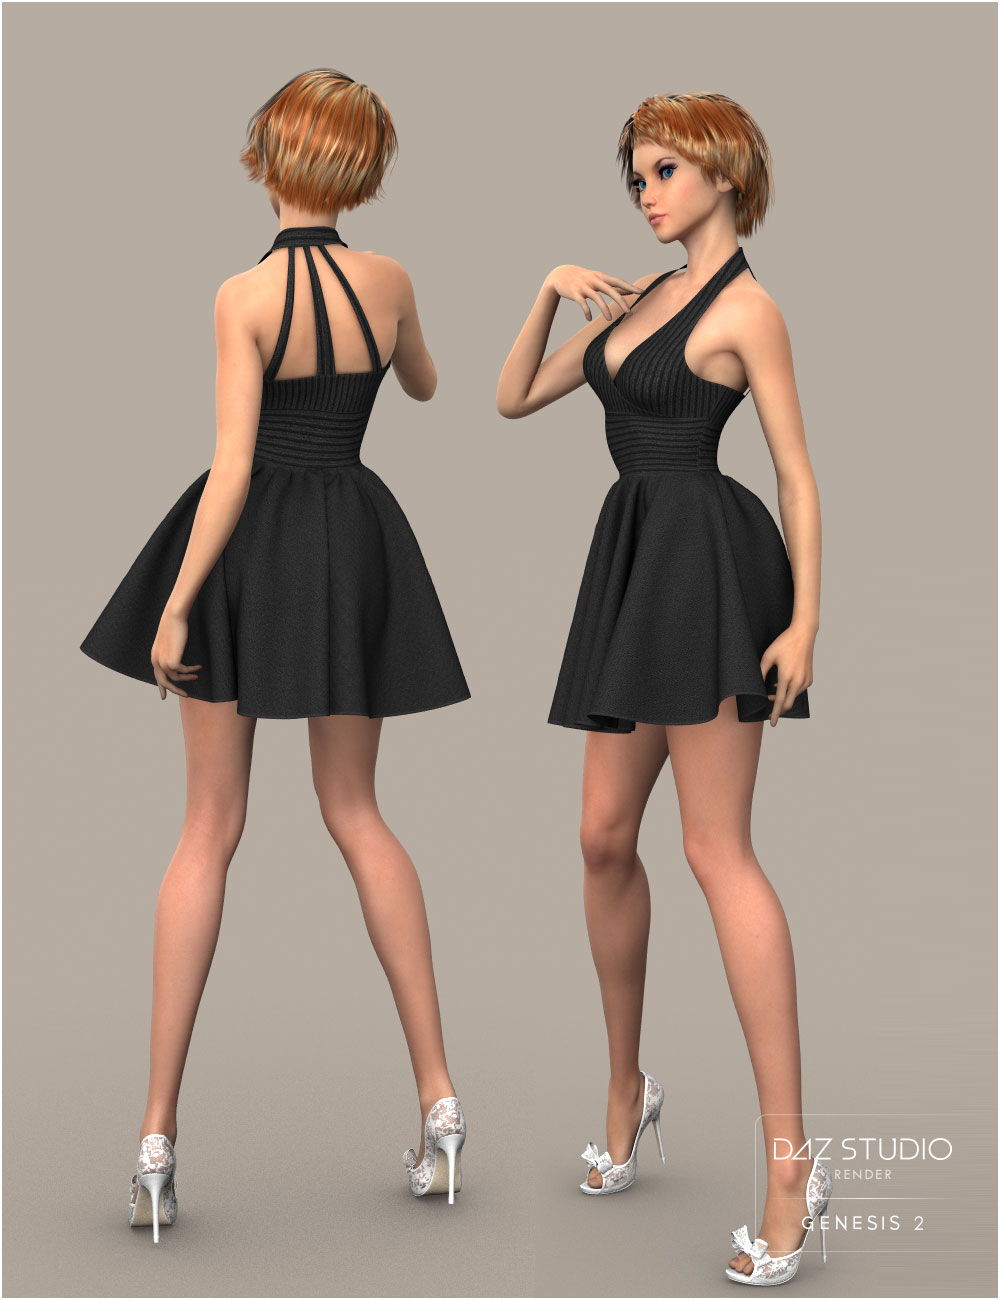 W Skirt for Genesis 2 Female(s) by: Cute3D, 3D Models by Daz 3D